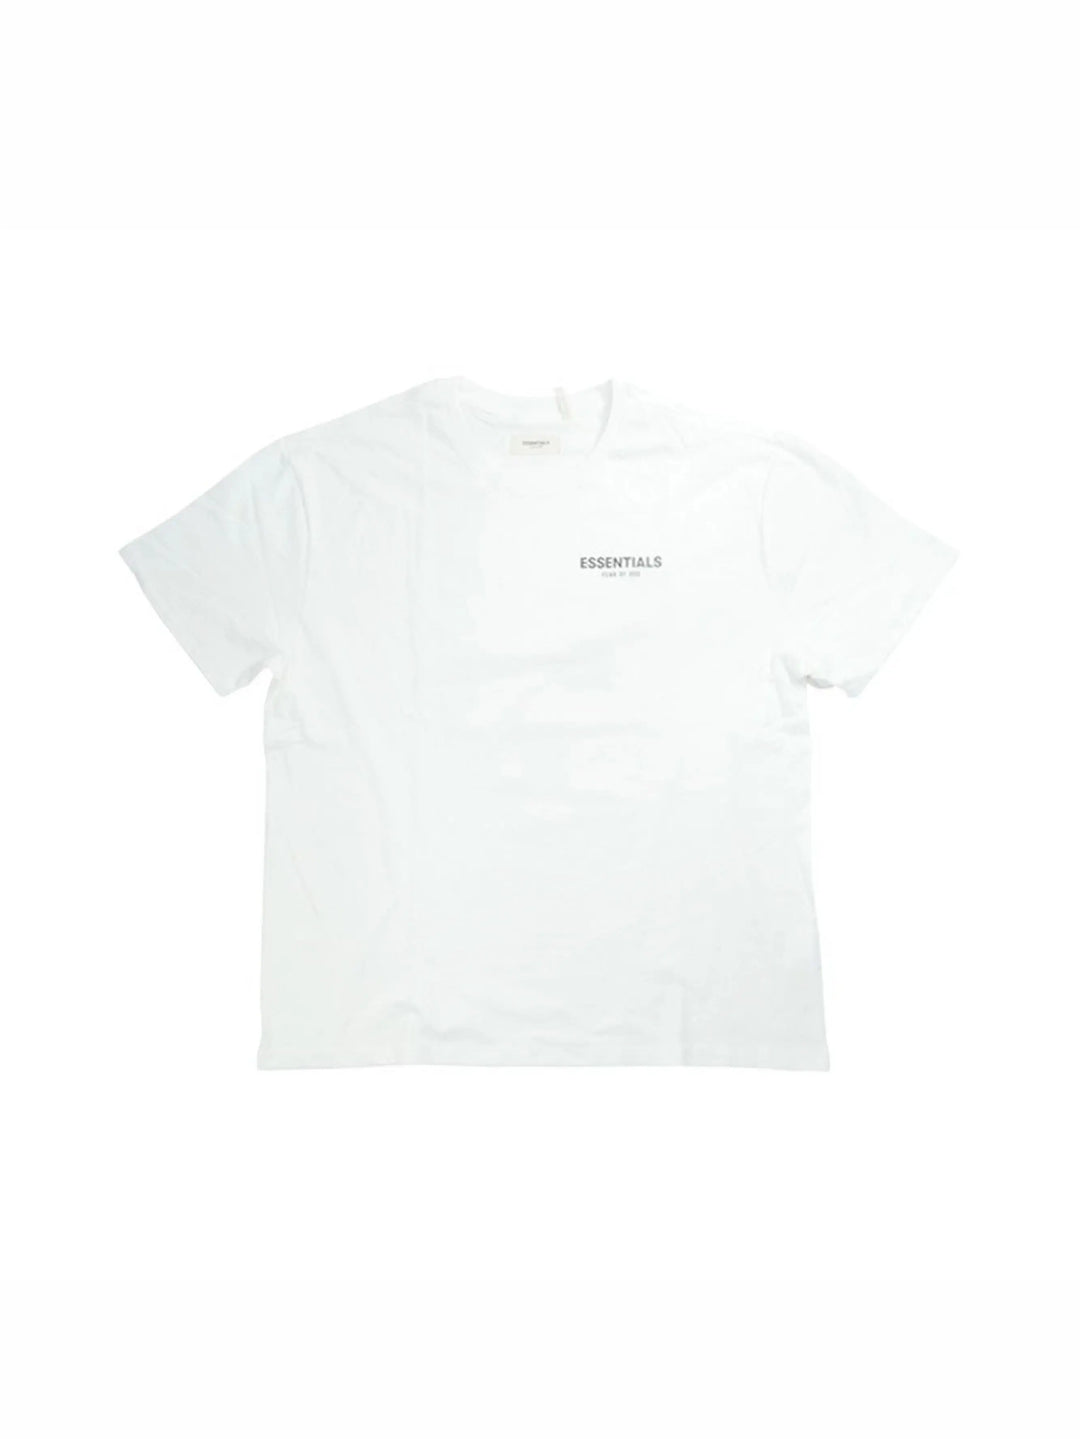 Fear of God Essentials Boxy Logo T-shirt White in Melbourne, Australia - Prior